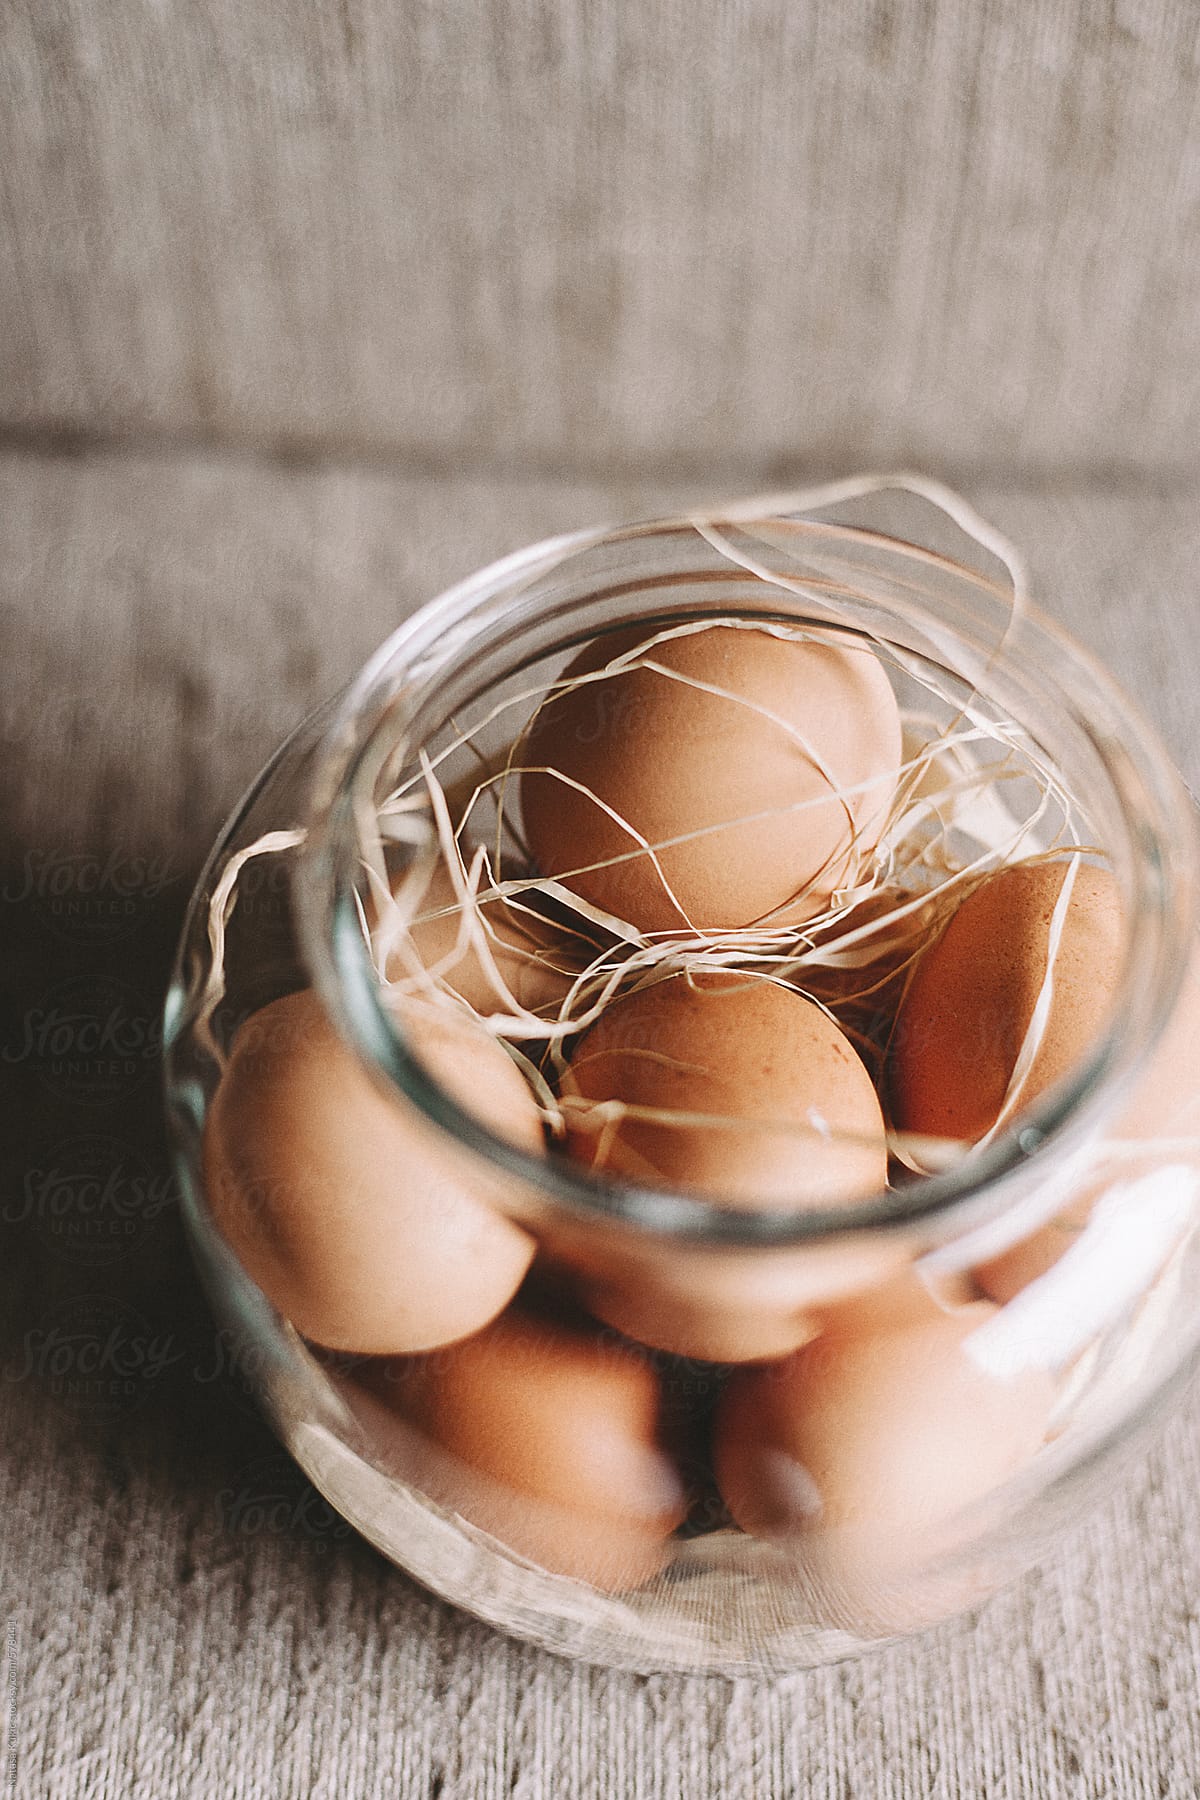 Eggs in a glass jar